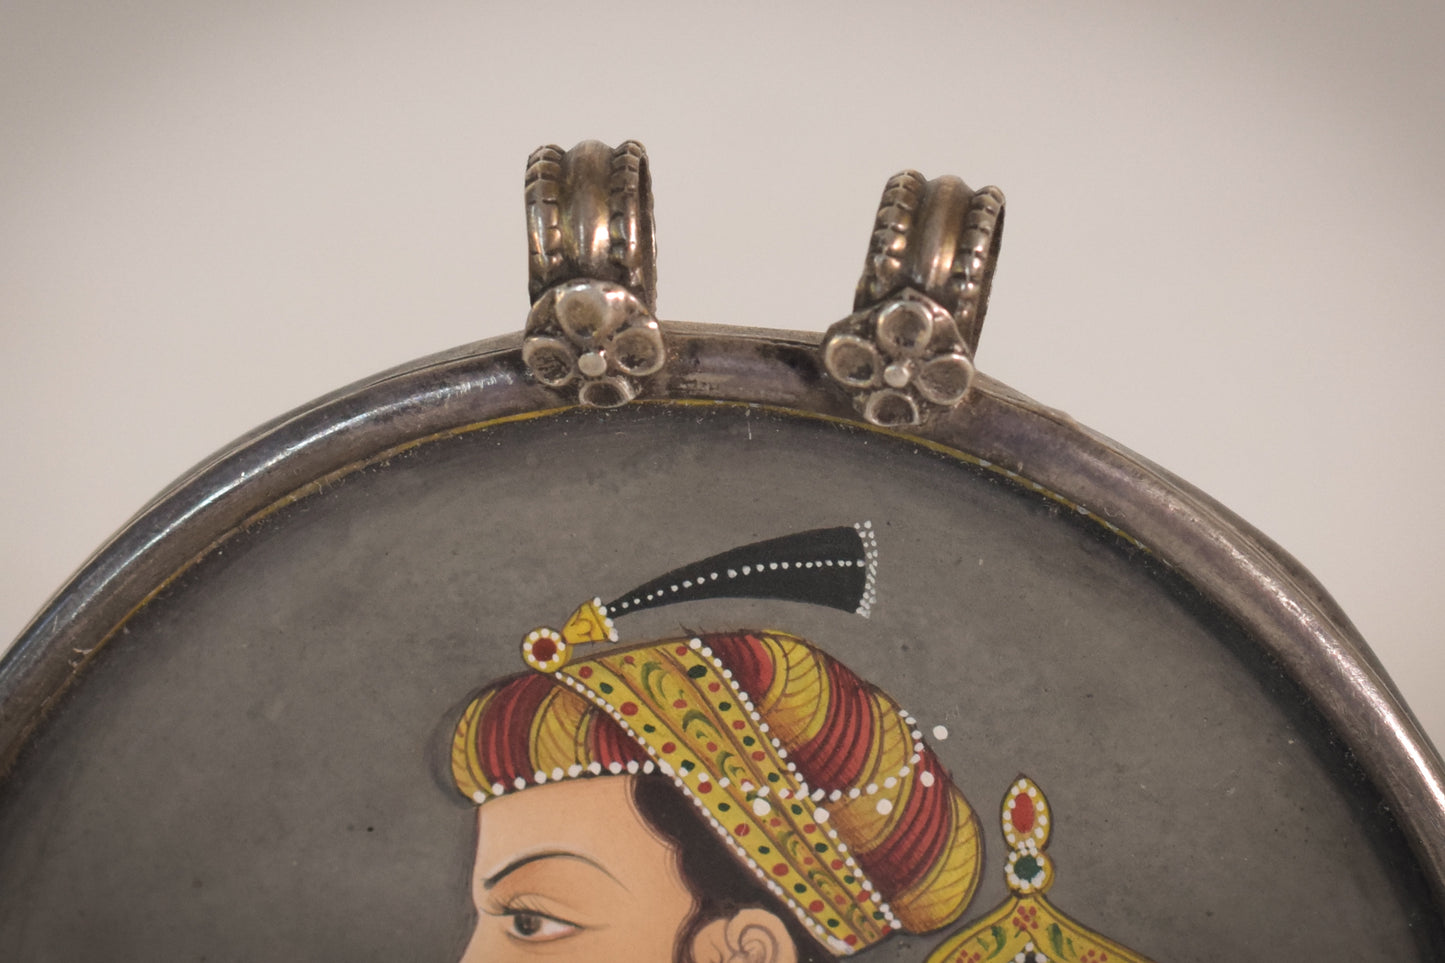 Fine Early Islamic Miniature - A Persian Prince